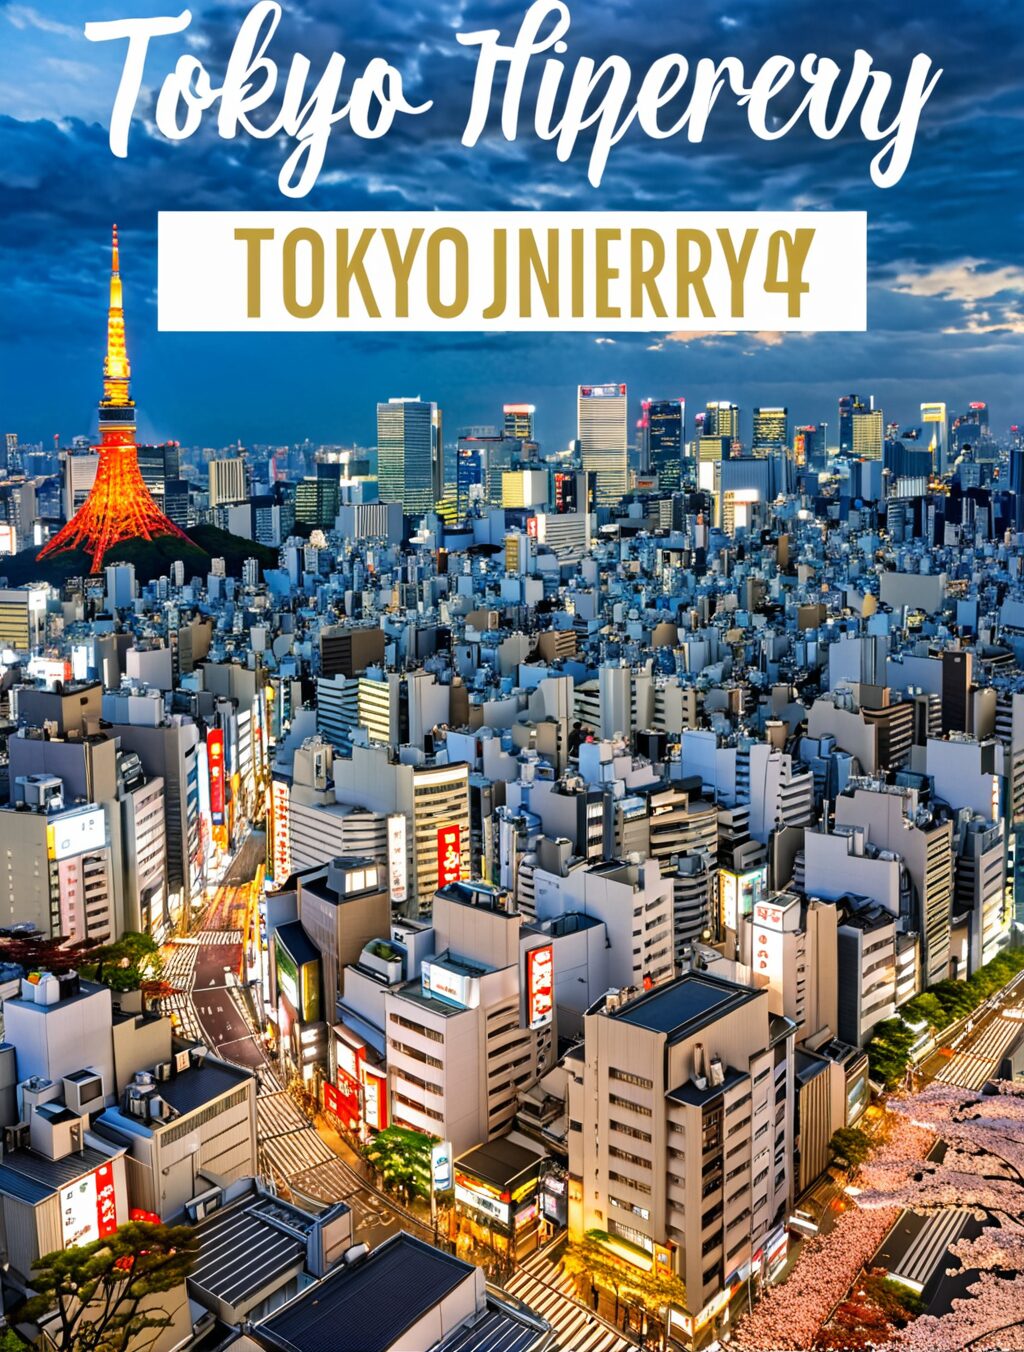 tokyo japan itinerary 4 days